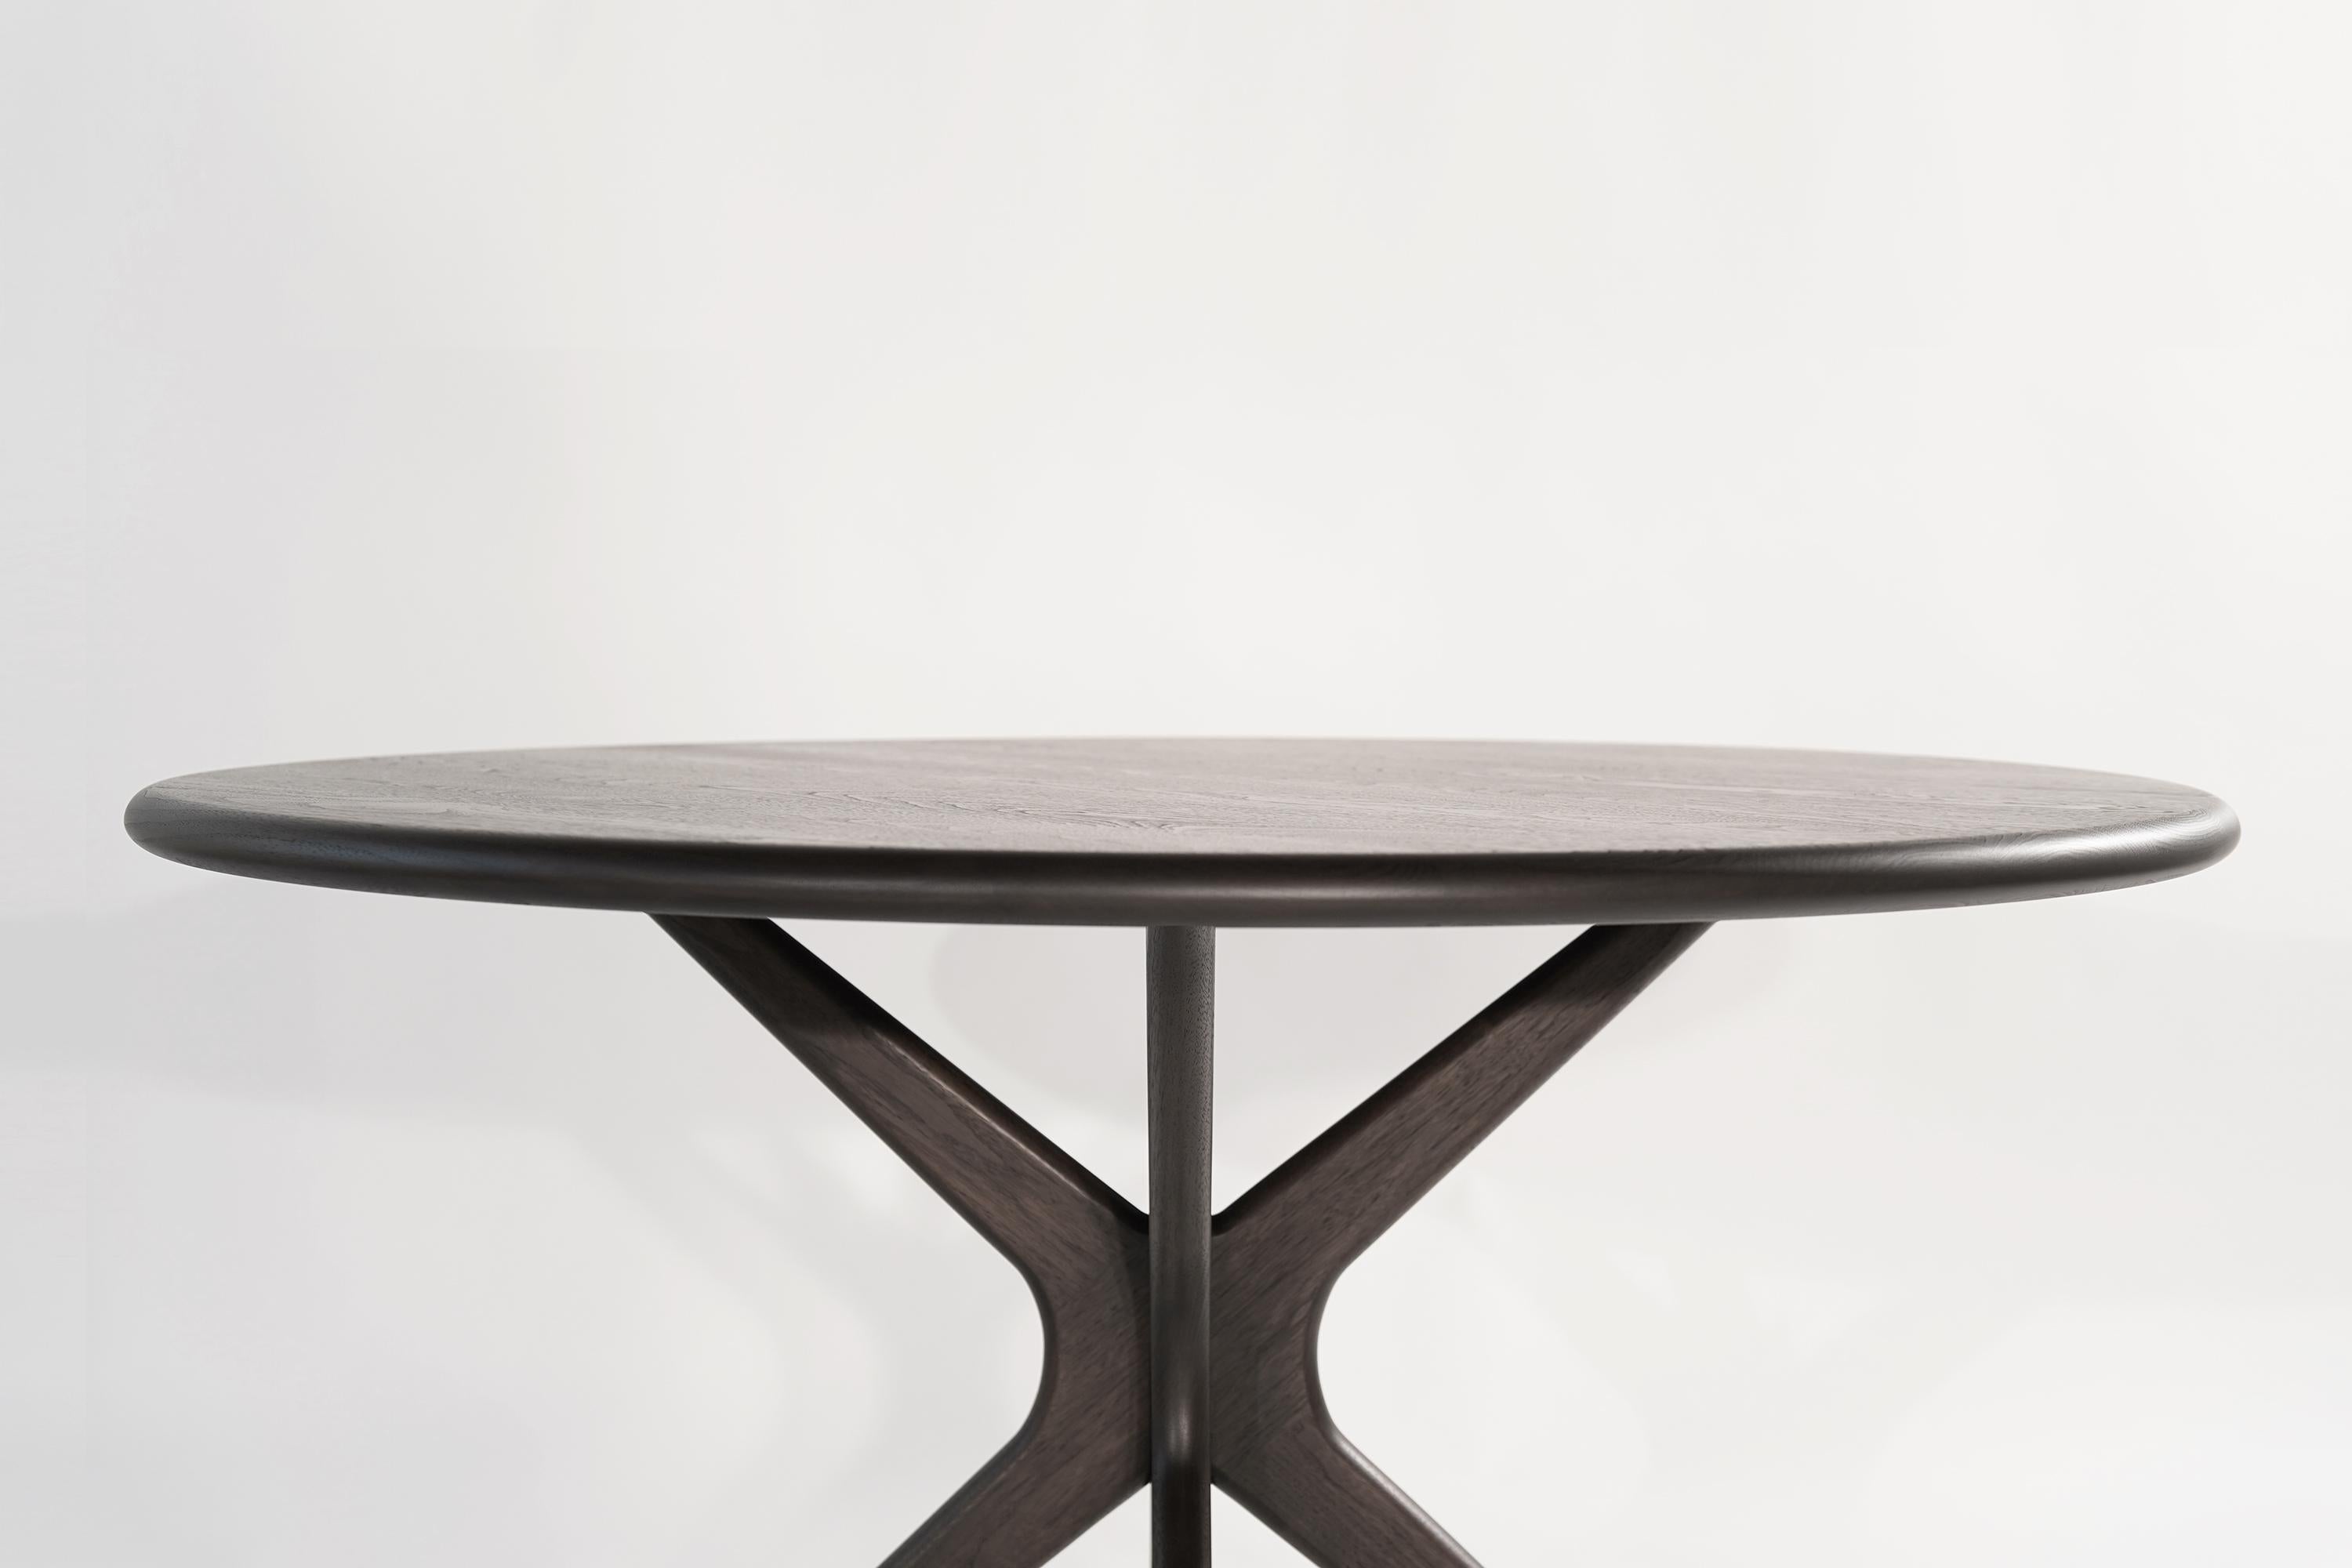 Contemporary Gazelle Breakfast Table in Espresso by Stamford Modern